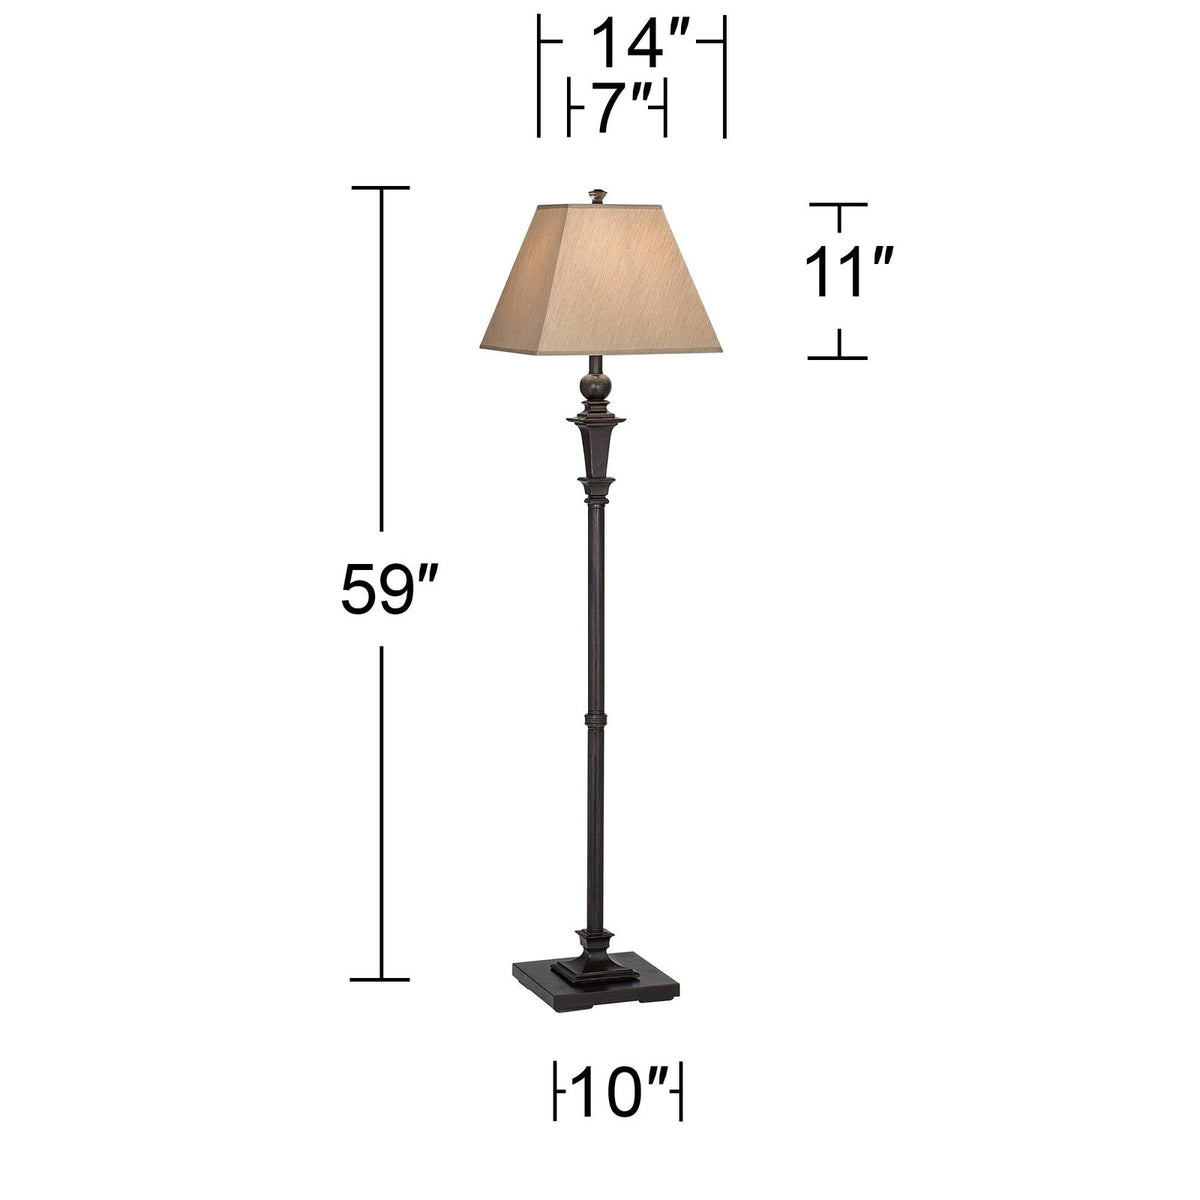 59" High Traditional Italian Floor Lamp Bronze Finish And Metal Pole